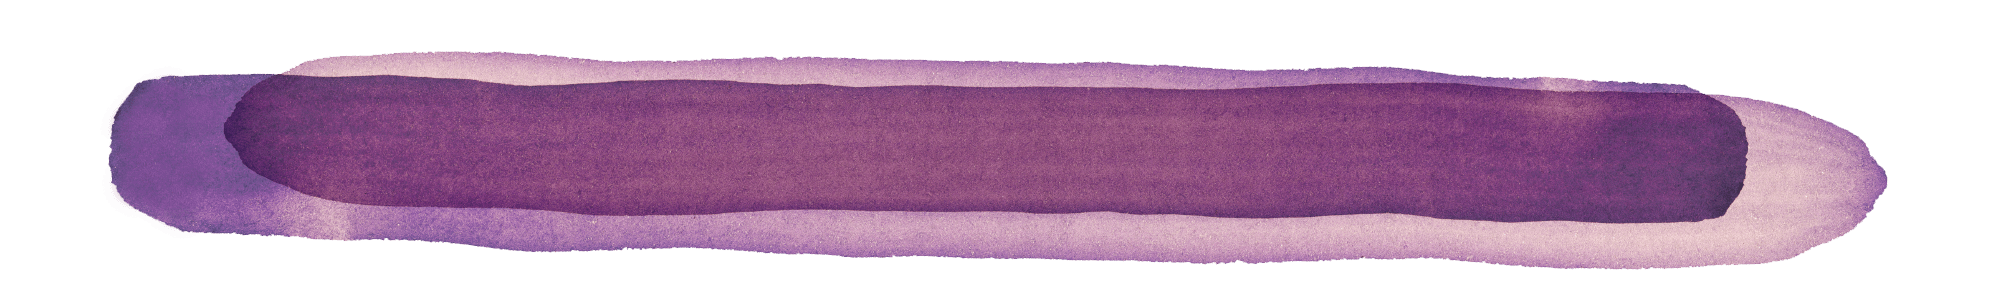 background swatch purple